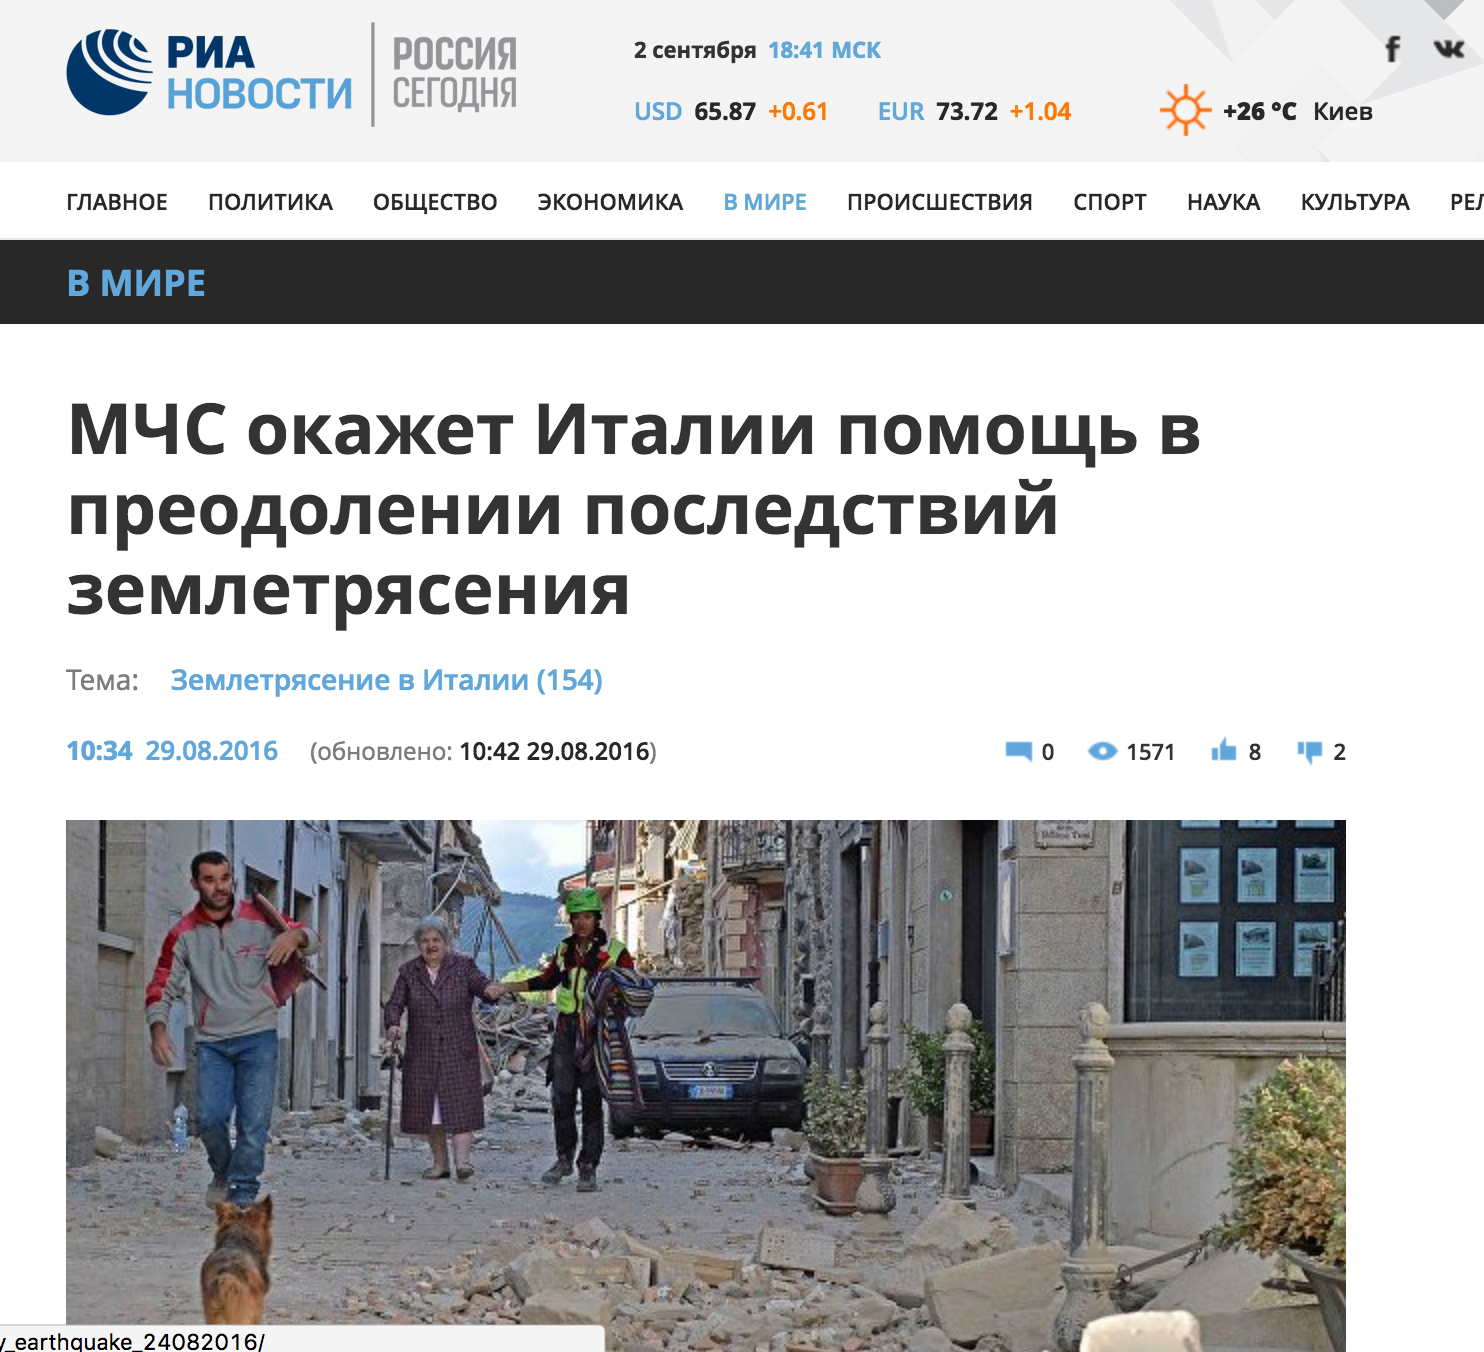 "El Ministerio de emegrencias va a ayudar a Italia recuperarse después del terremoto", tass.ru